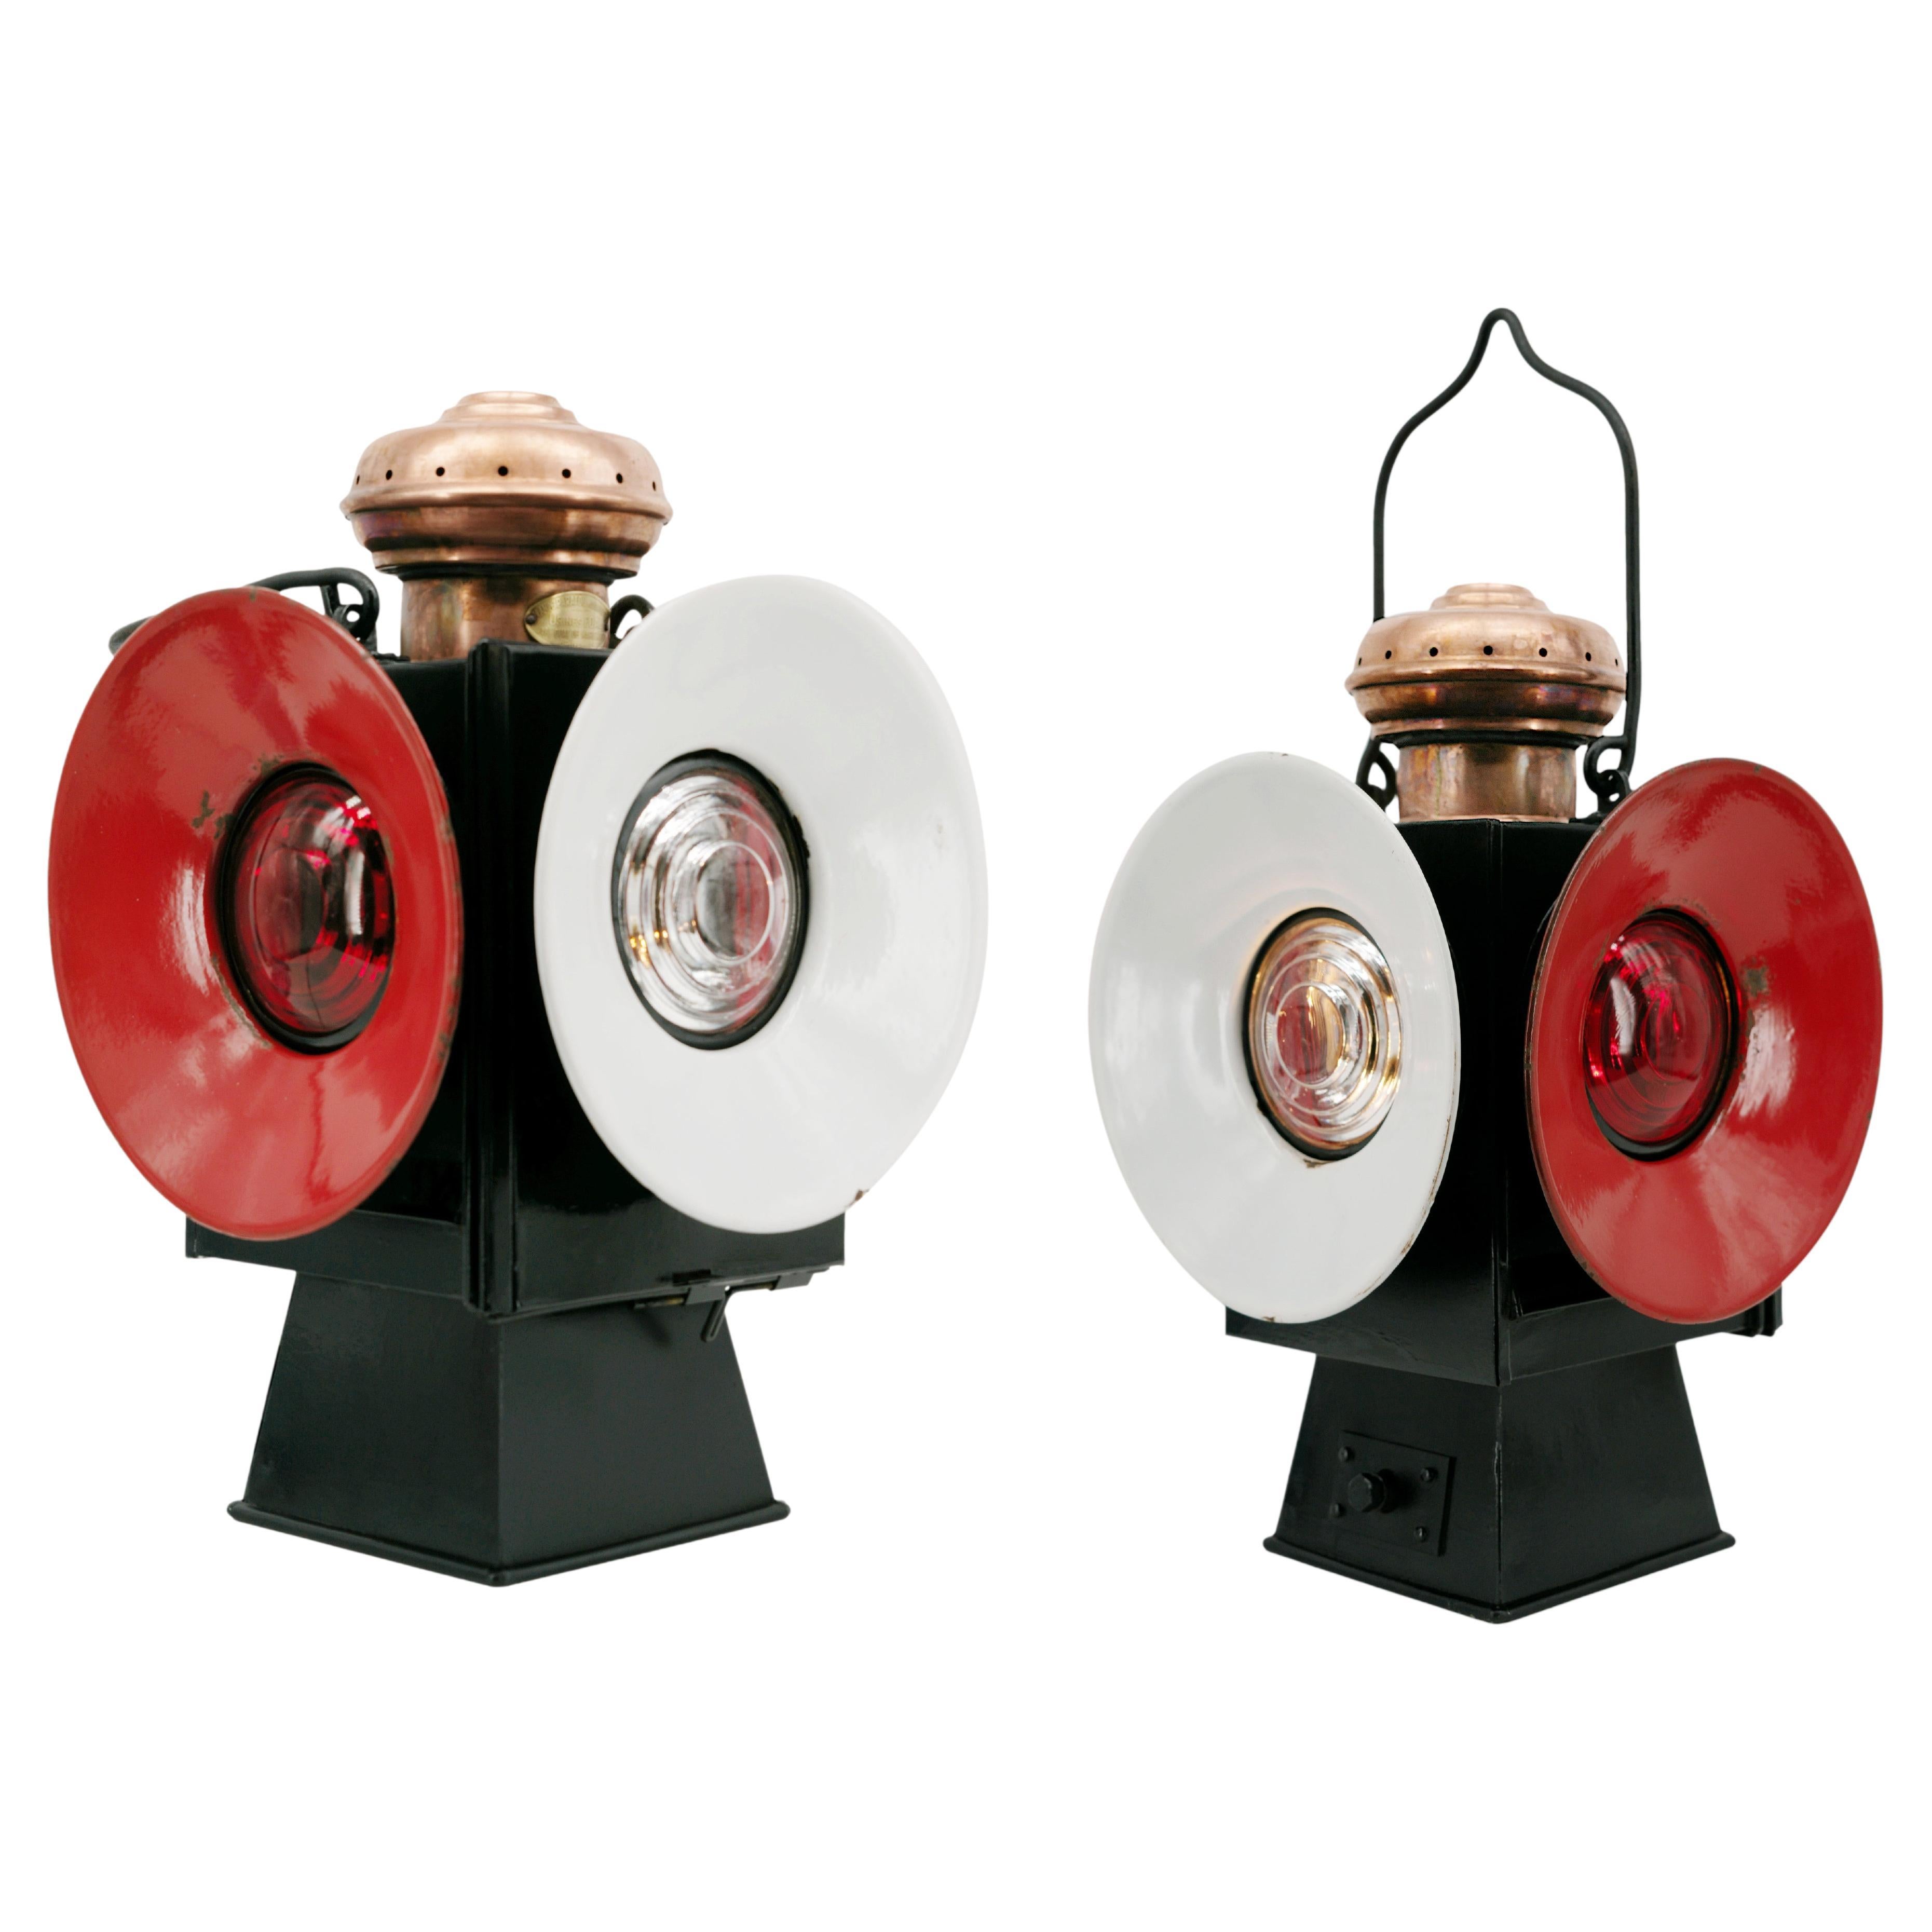 Art Deco Enameled Railway Table lamp or Lantern, 1920s